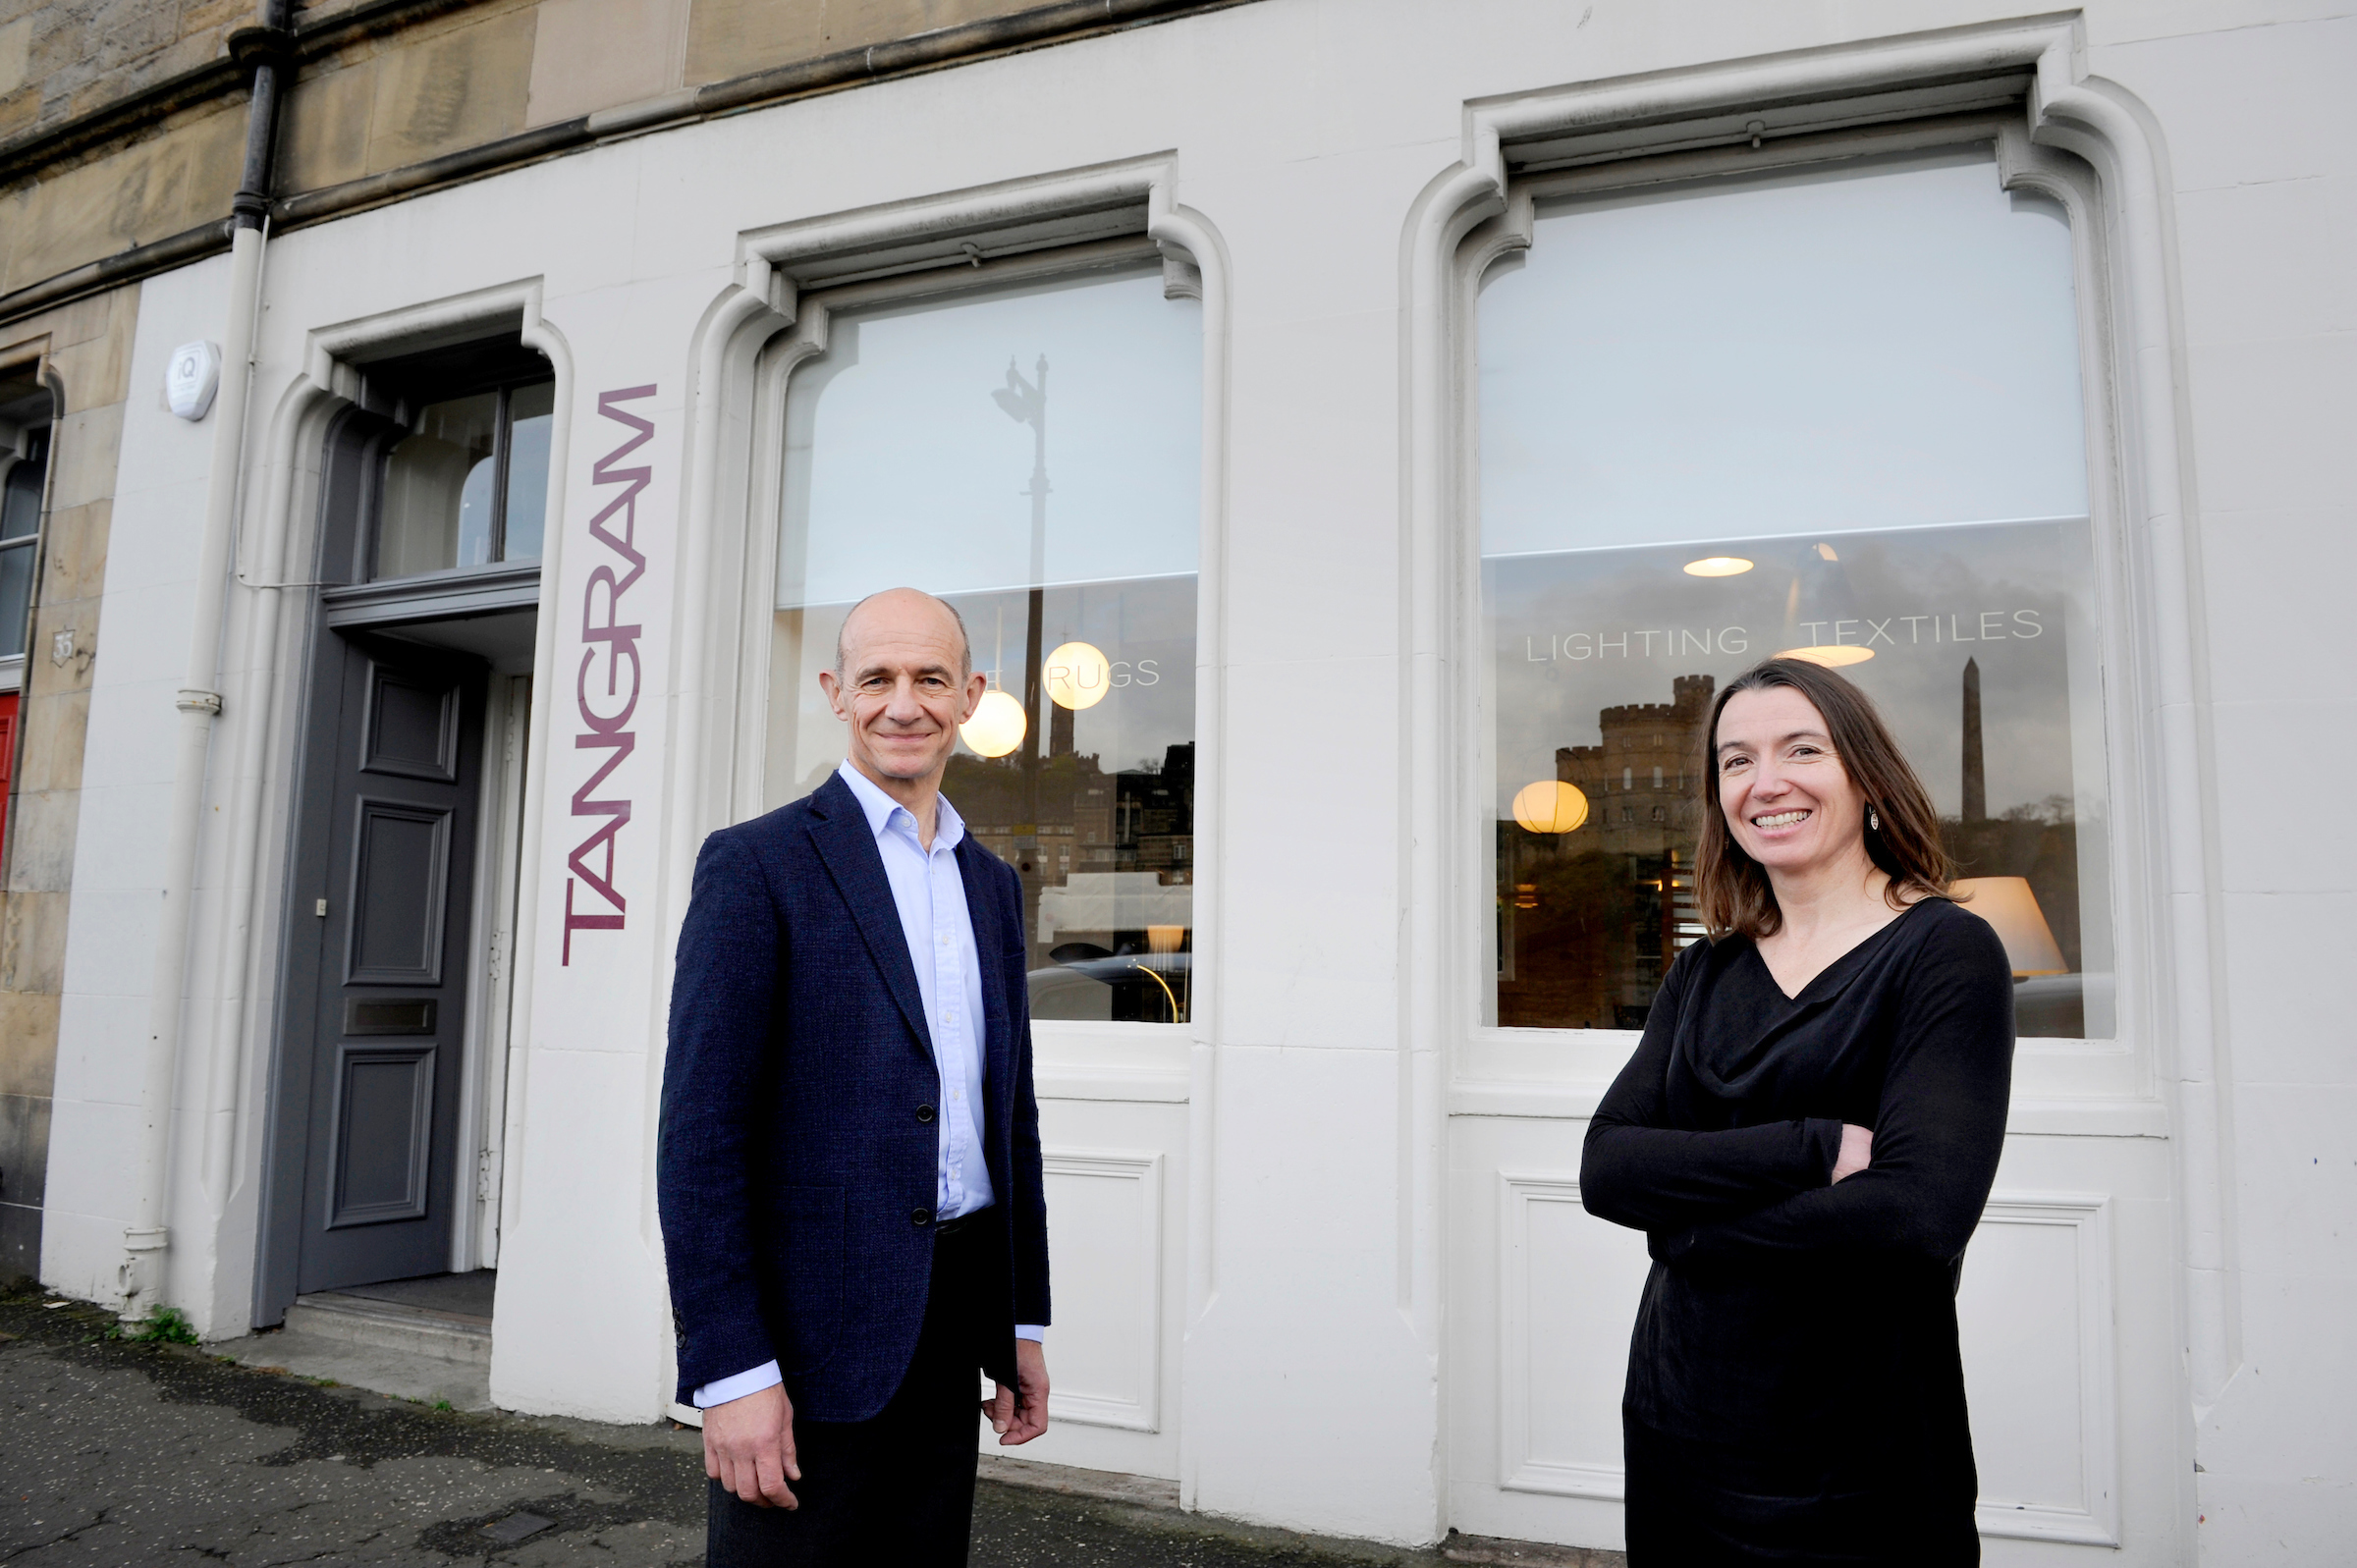 Edinburgh-based Tangram moves into employee ownership